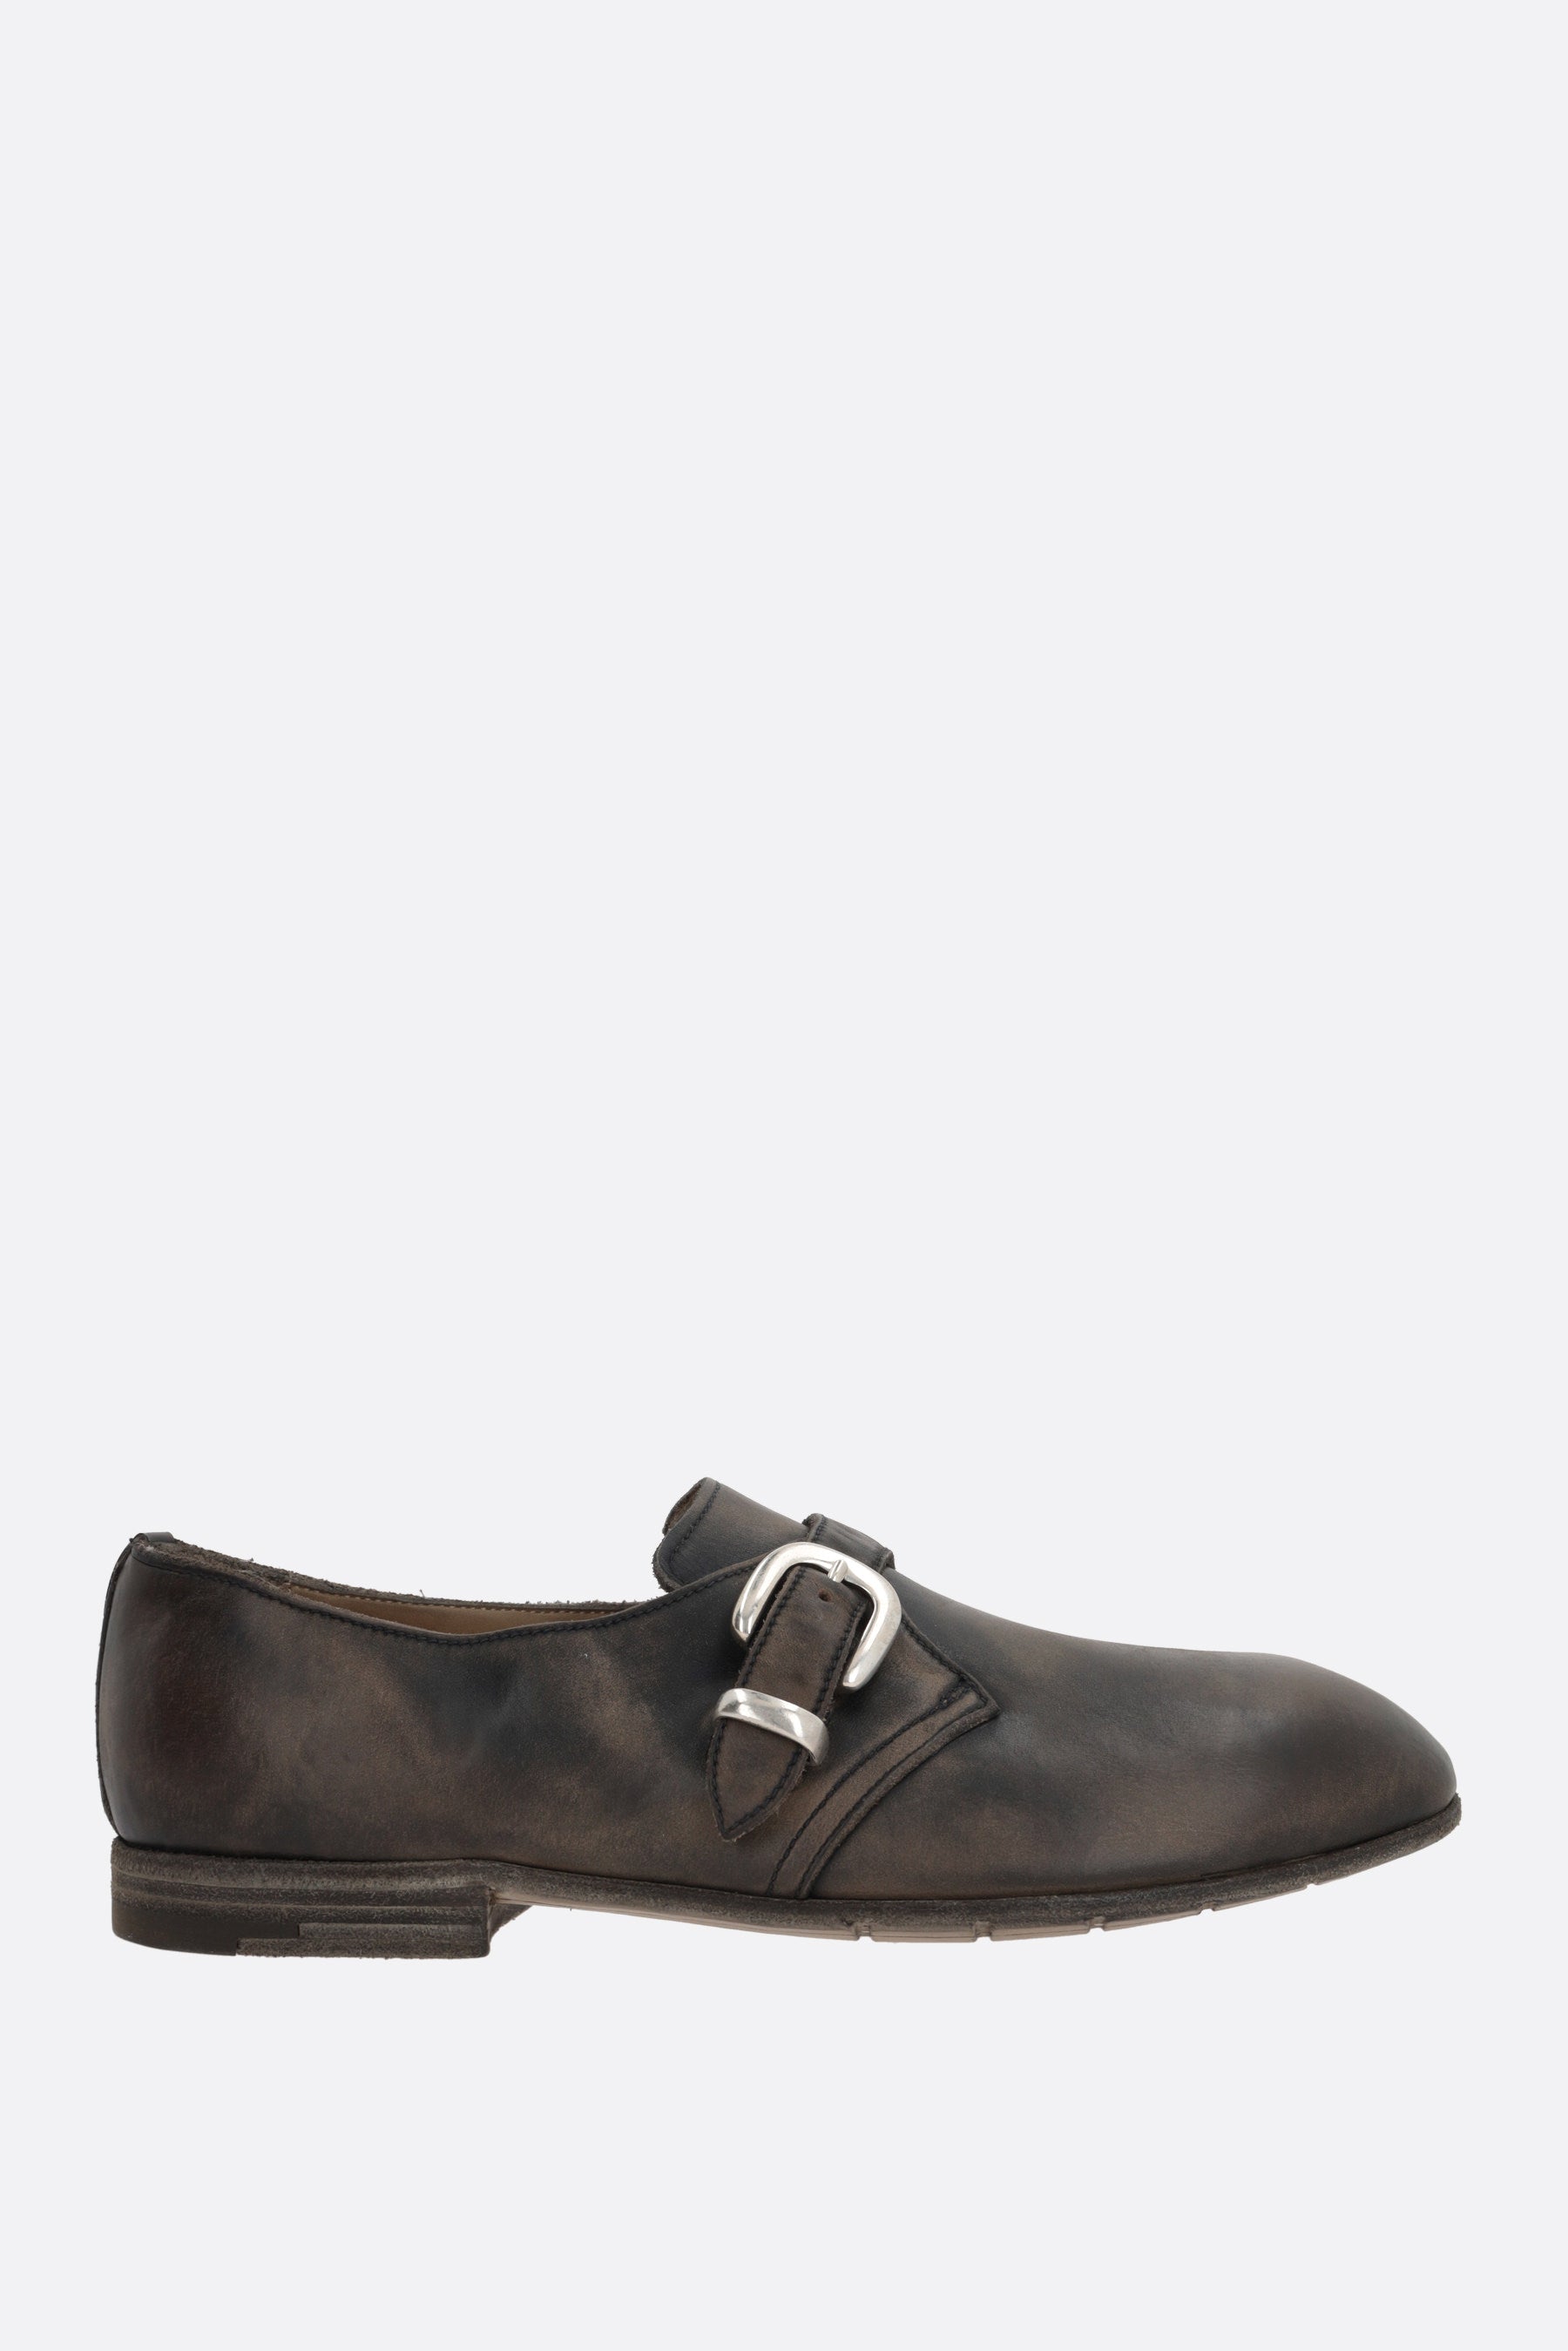 Dress Brass vintage leather monk strap shoes